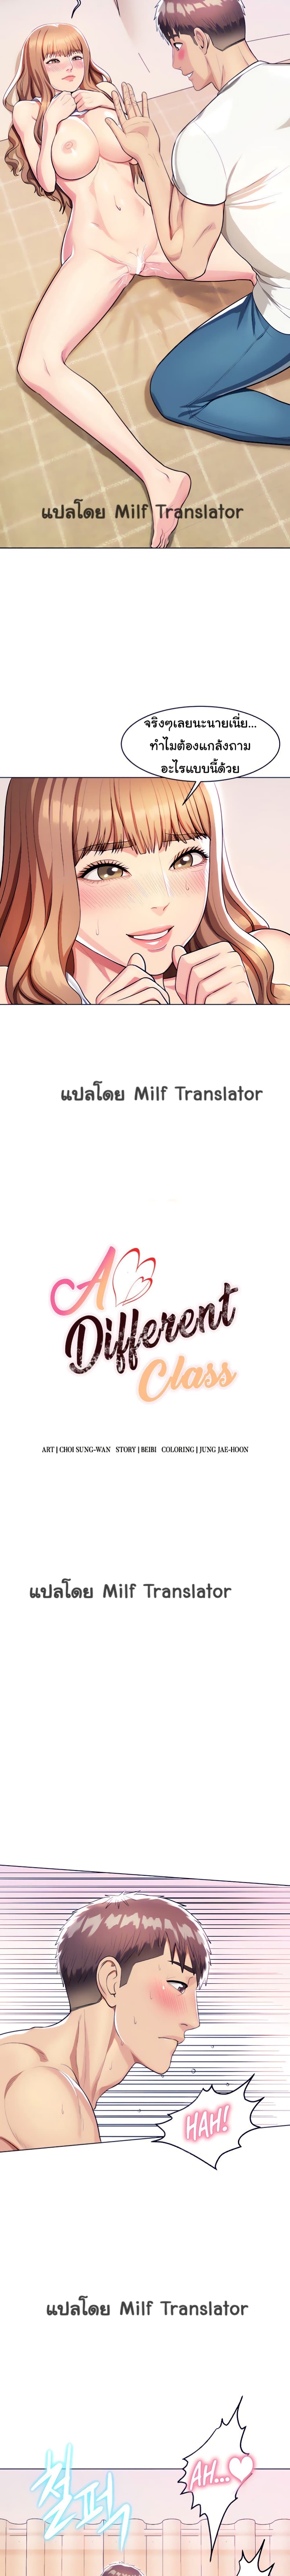 A Different Class 6 06